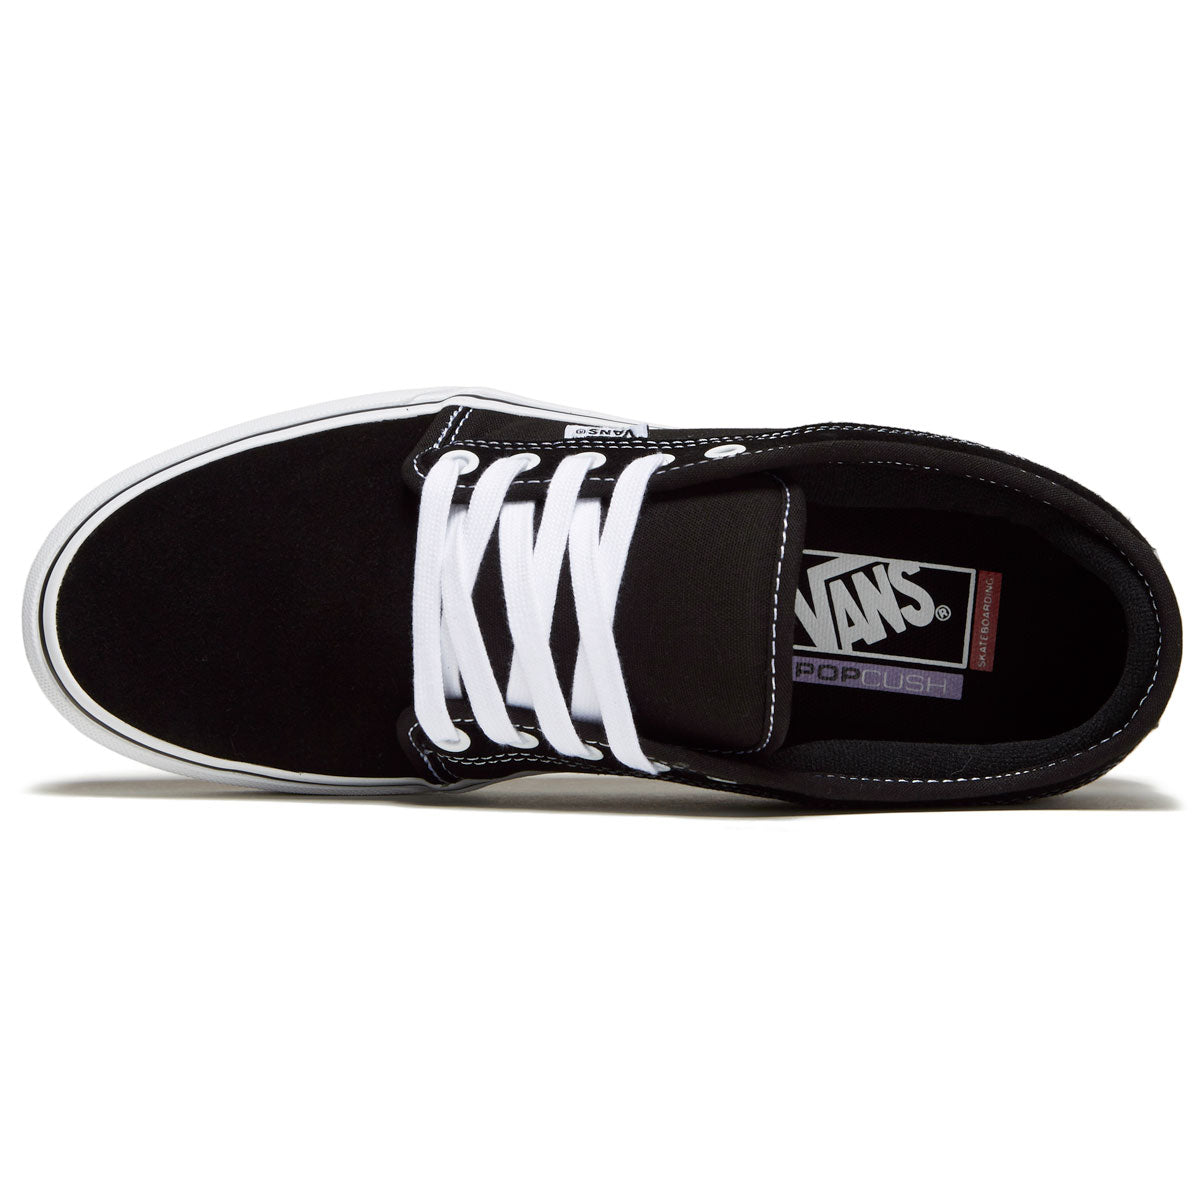 Vans Skate Chukka Low Shoes - Black/White image 3